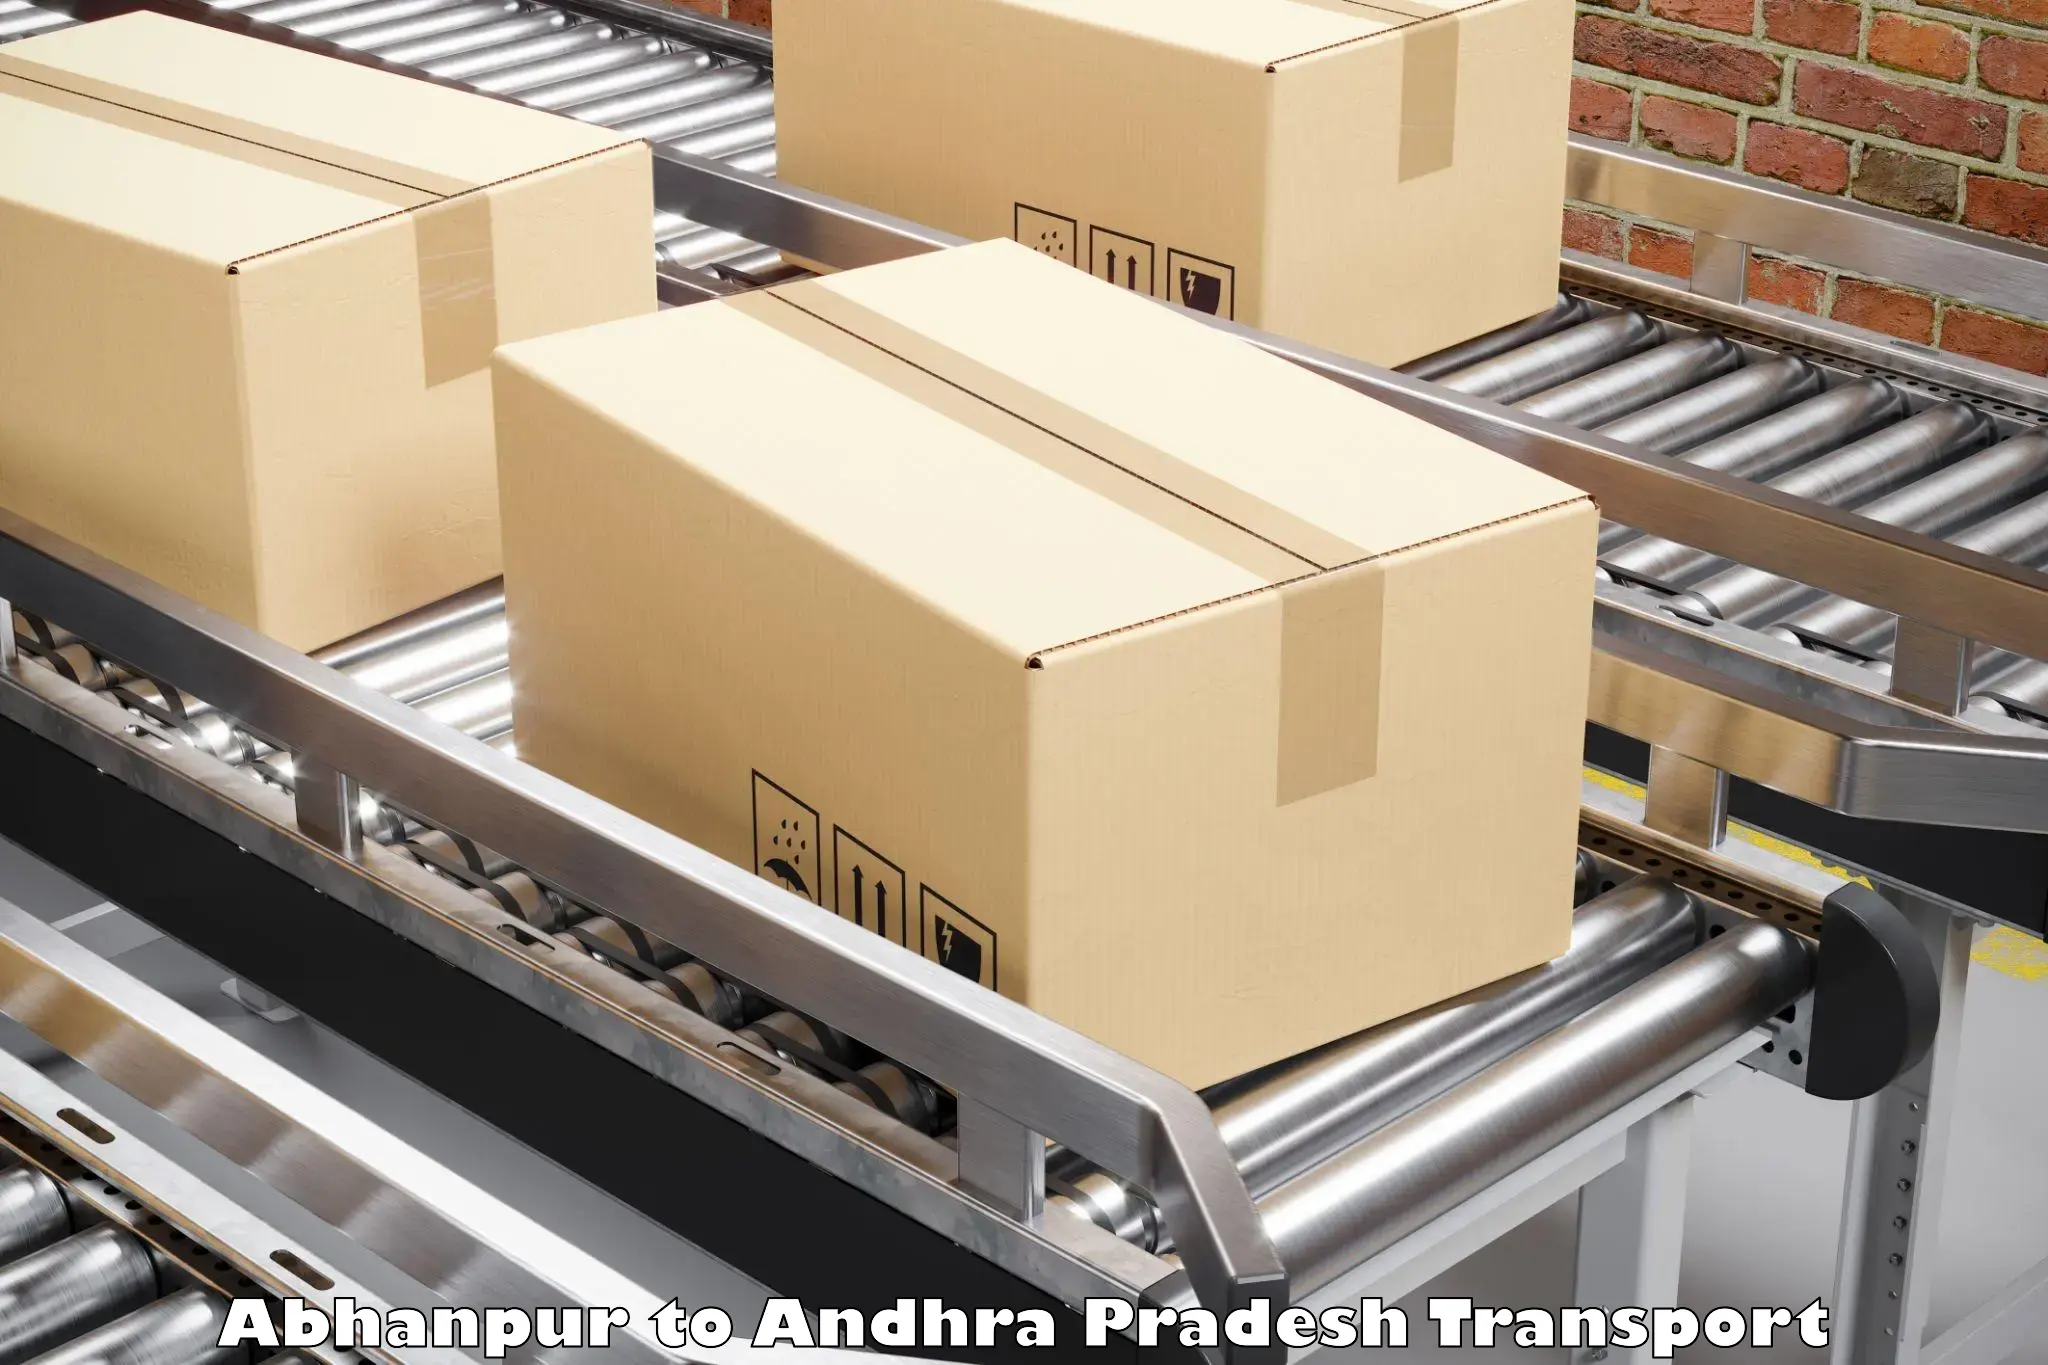 Shipping partner Abhanpur to Kalyandurg